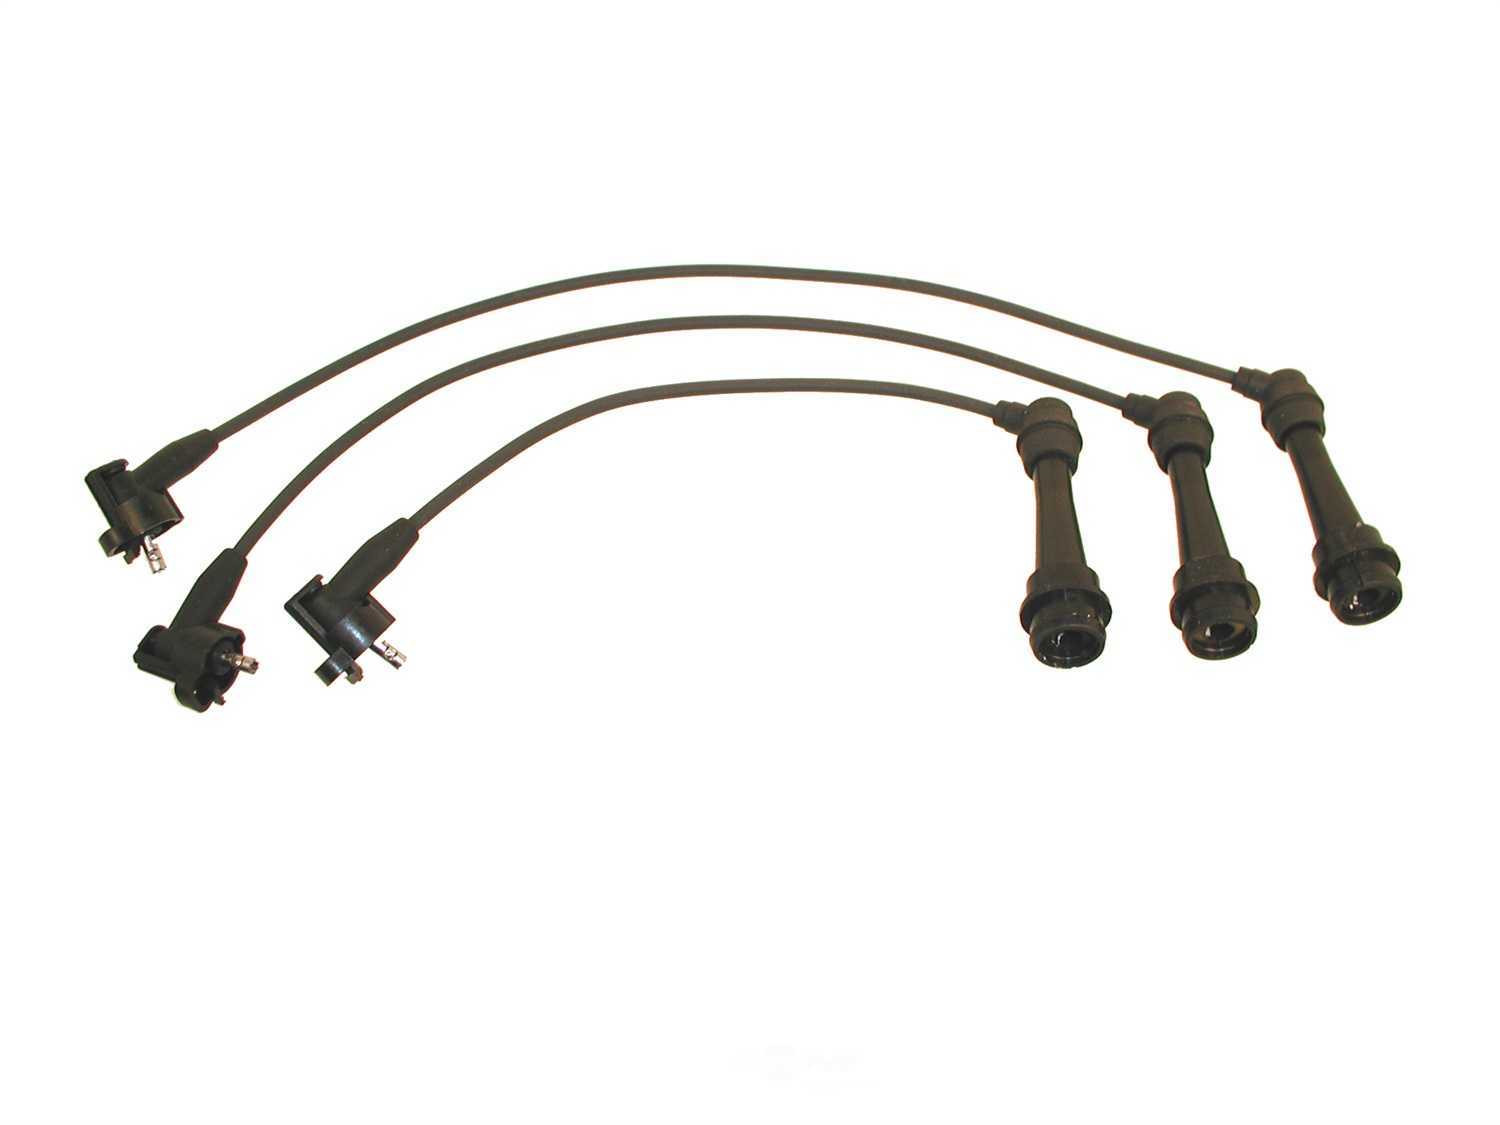 KARLYN/STI - Karlyn-STI Spark Plug Wire Set - KLY 725